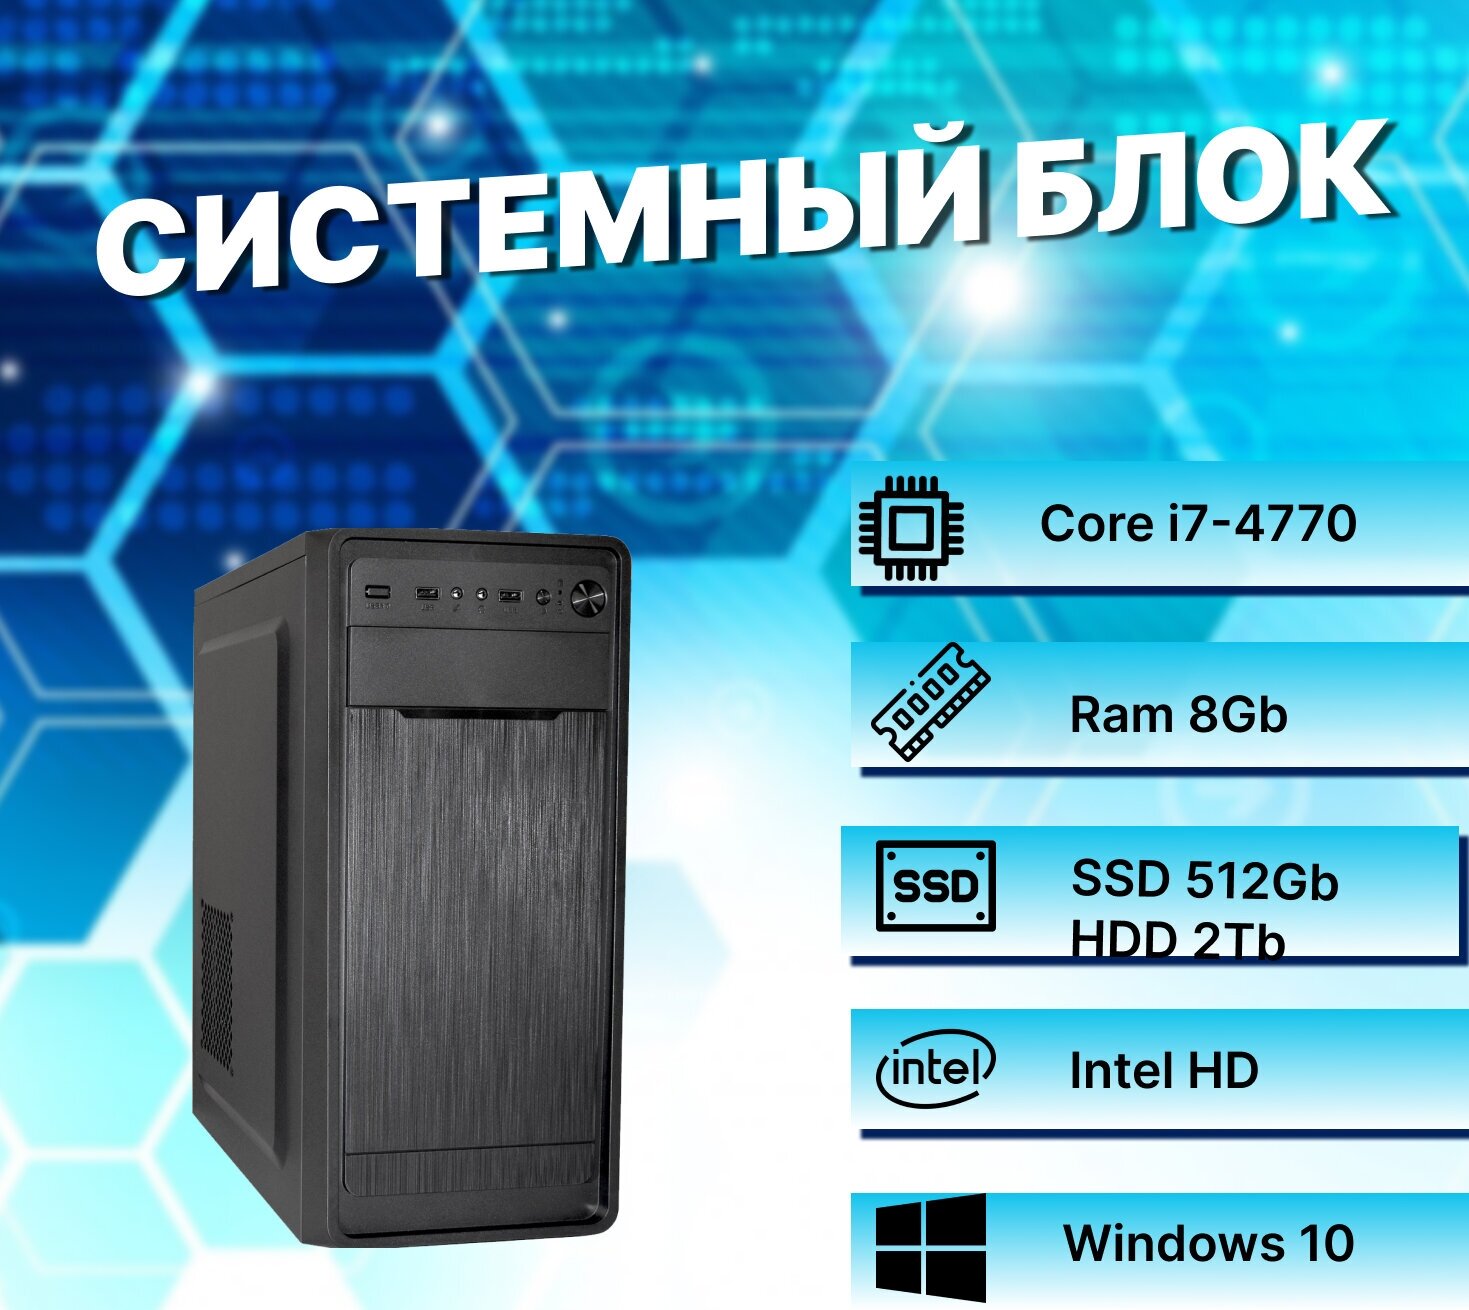 Системный блок Intel Core i7-4770 (3.4ГГц)/ RAM 8Gb/ SSD 512Gb/ HDD 2Tb/ Intel HD/ Windows 10 Pro